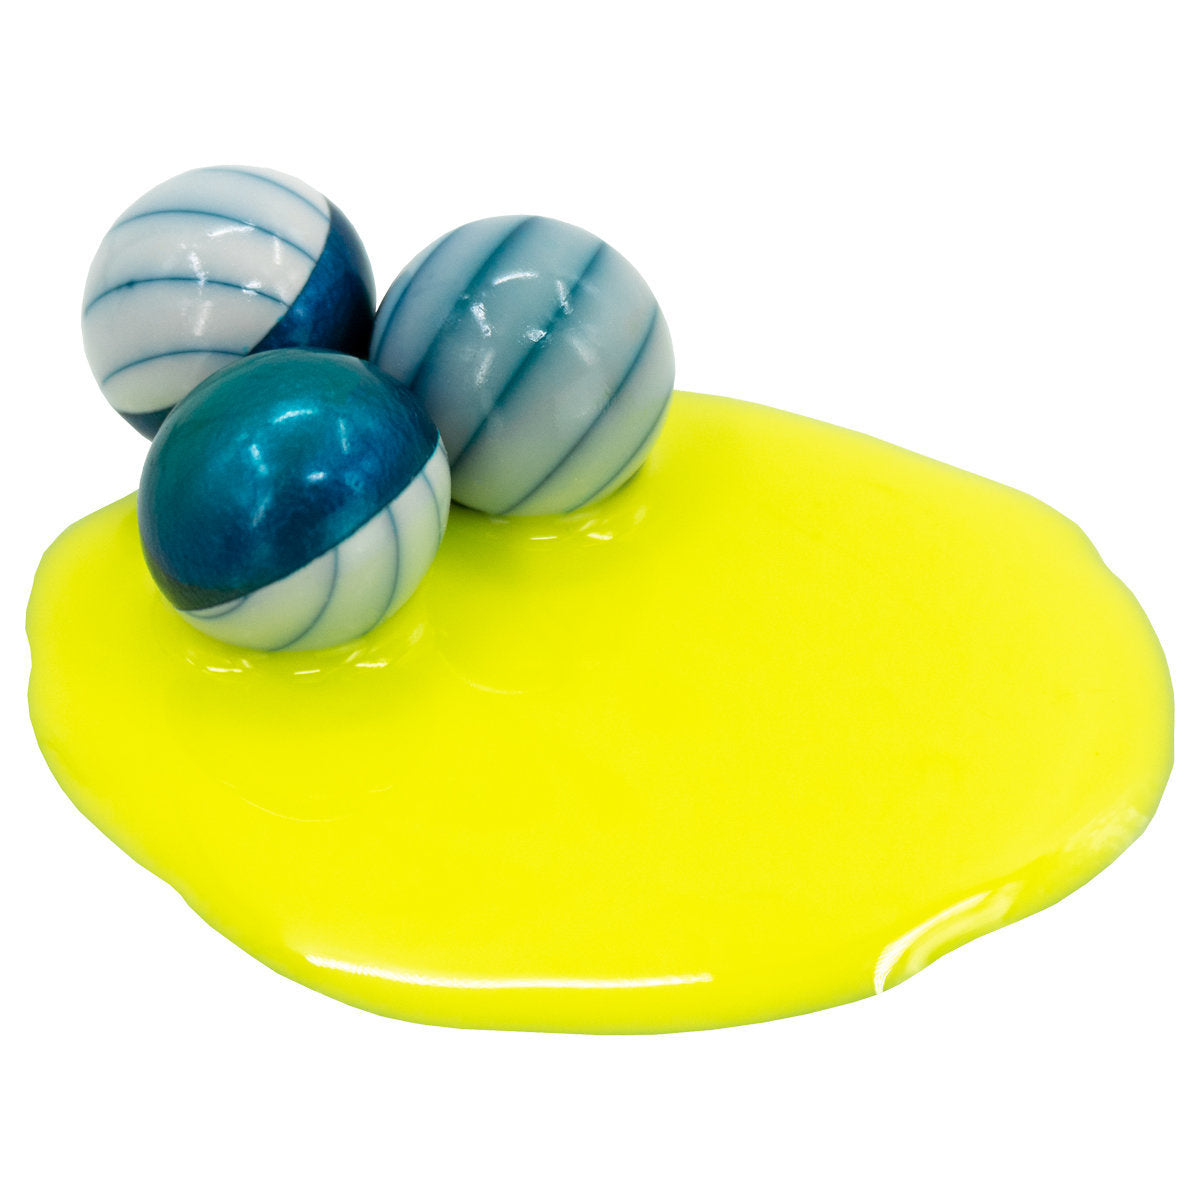 Valken Merica™ .68 Caliber Paintballs - 2,000Ct | Shop Paintballs